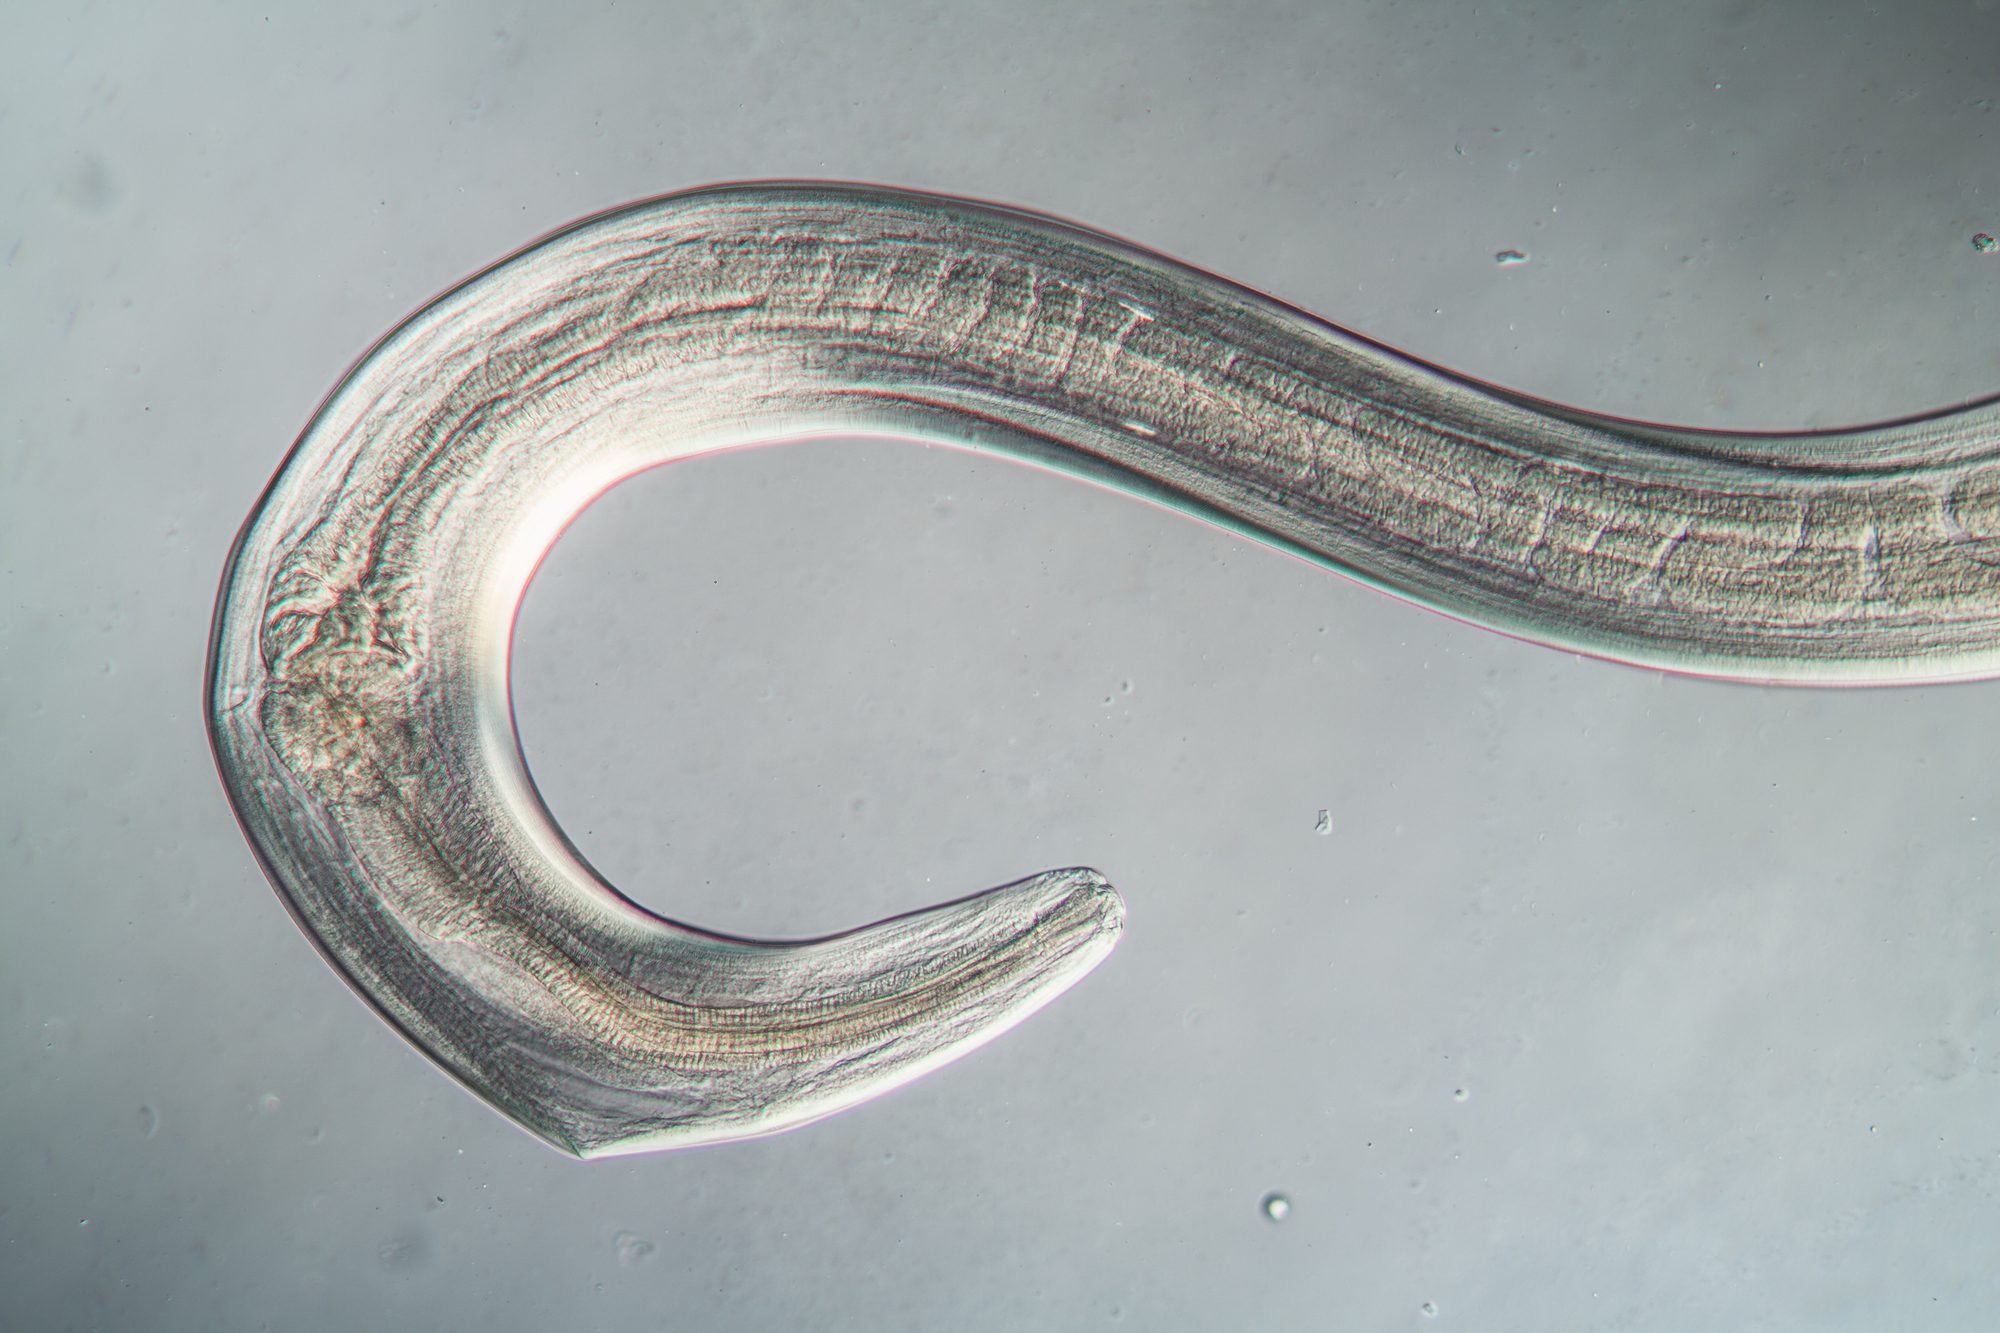 46,000-year-old nematodes wake up in lab